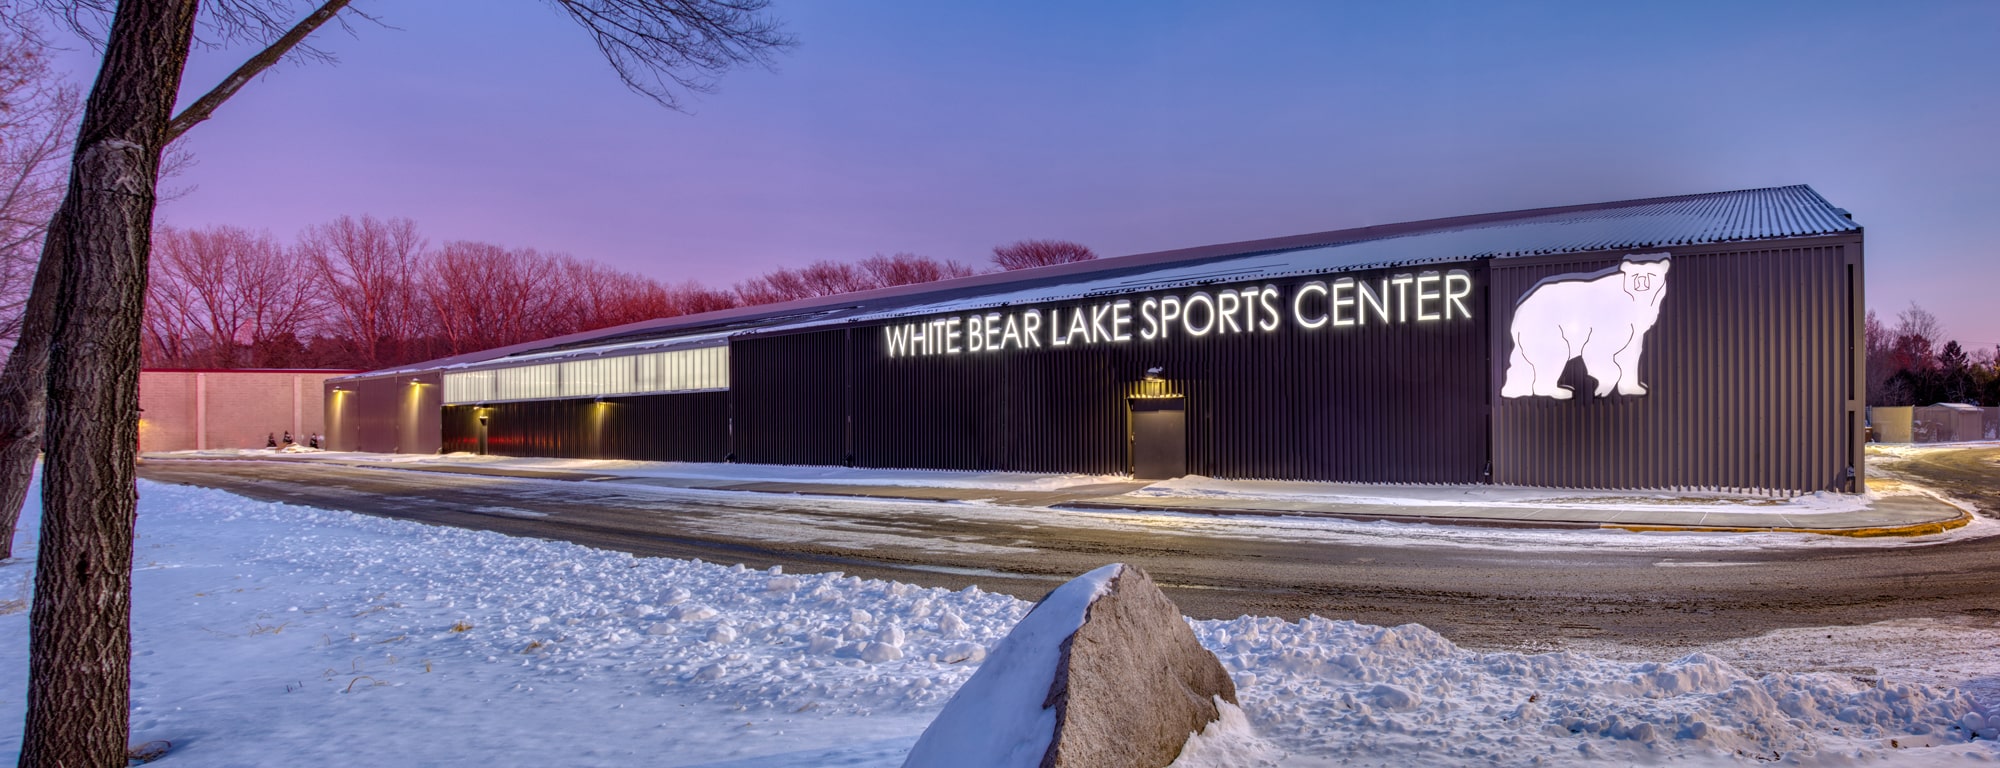 White Bear Lake Sports Center - White Bear Lake, Minnesota